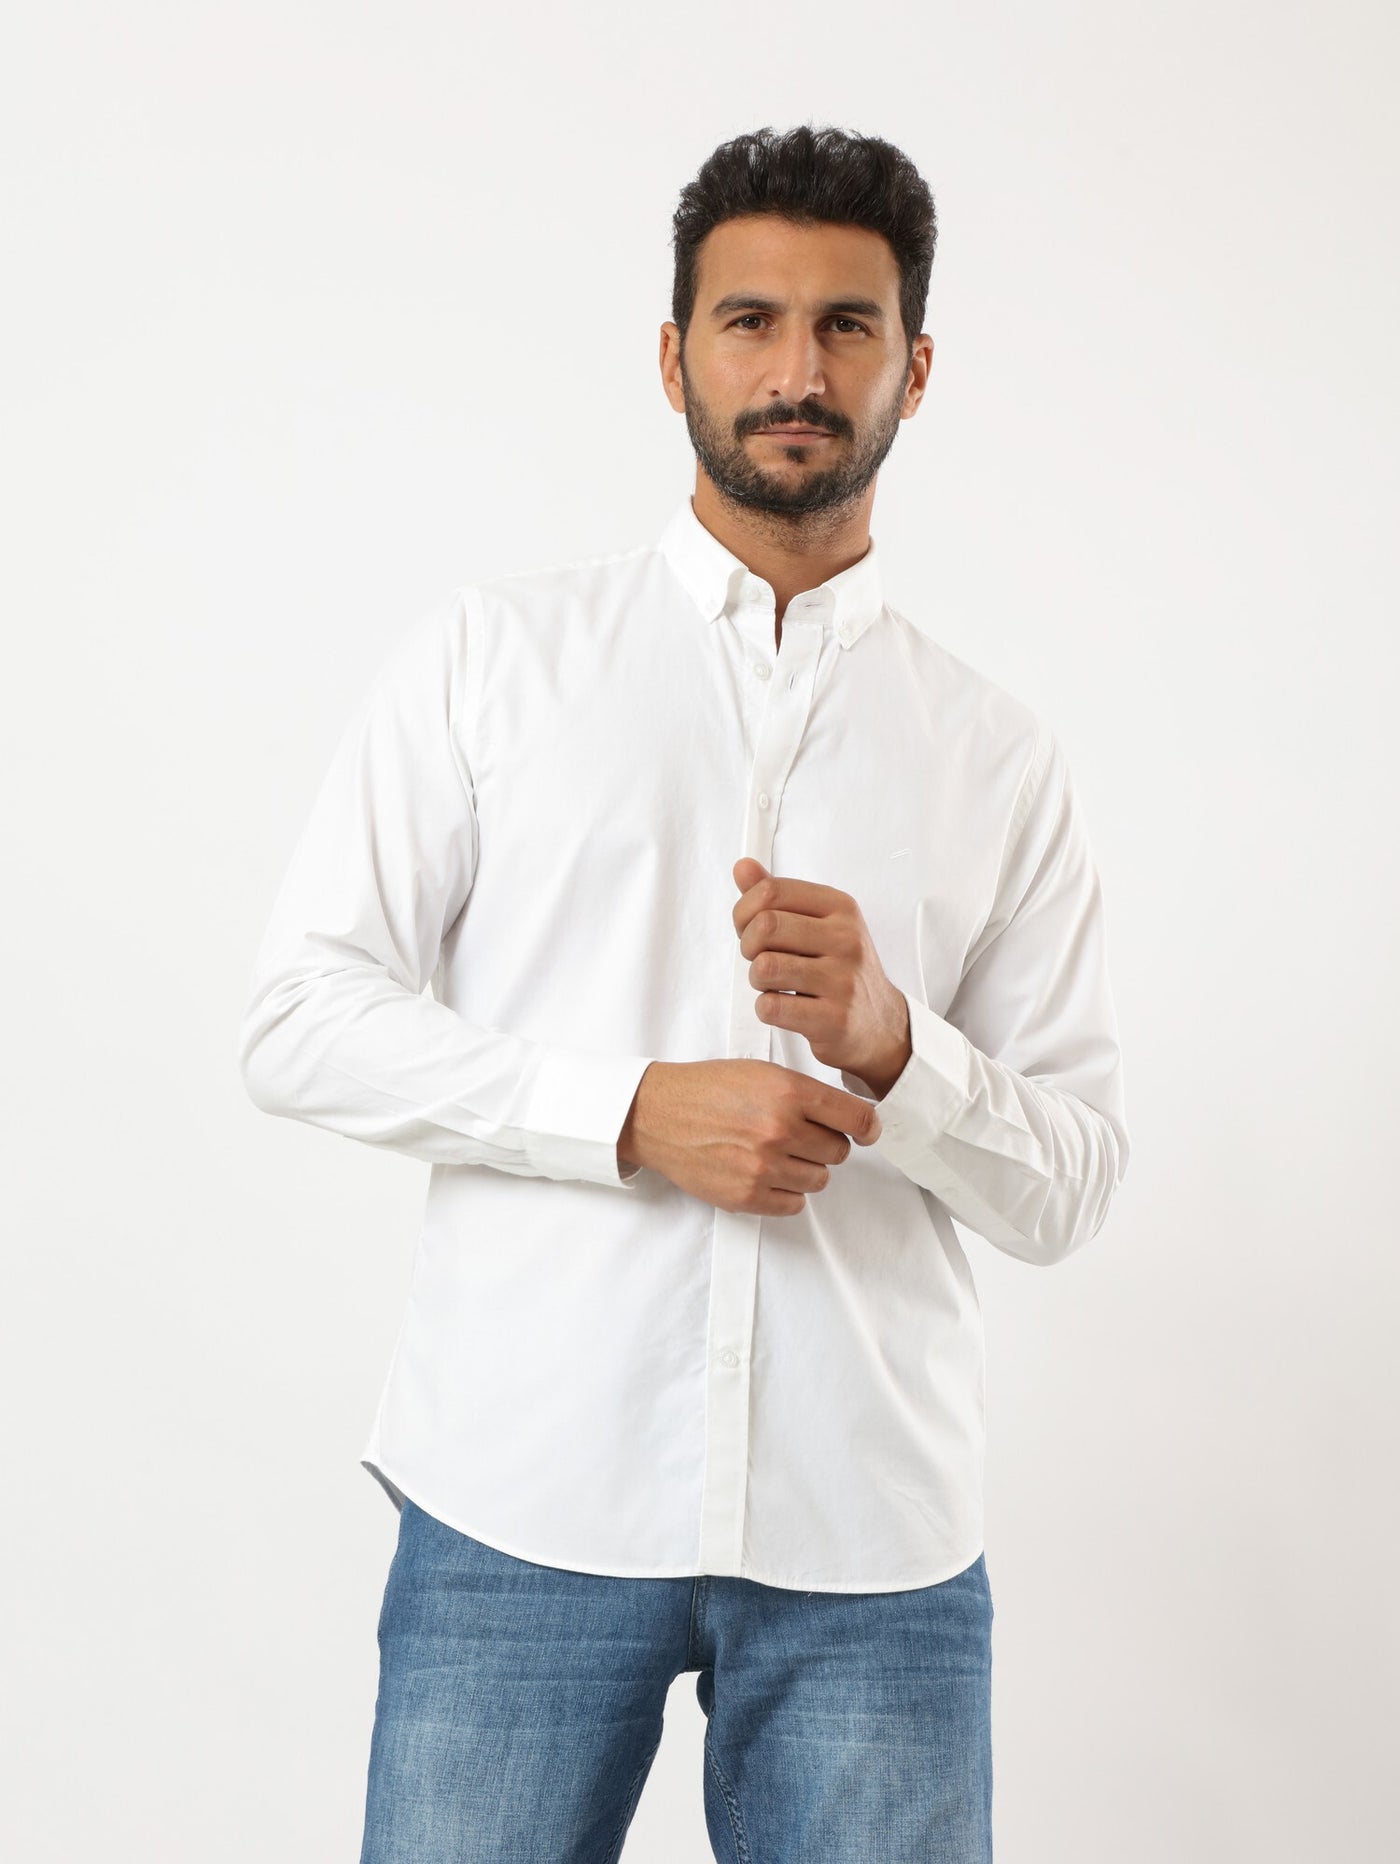 Shirt - Long Sleeves - Plain Pattern